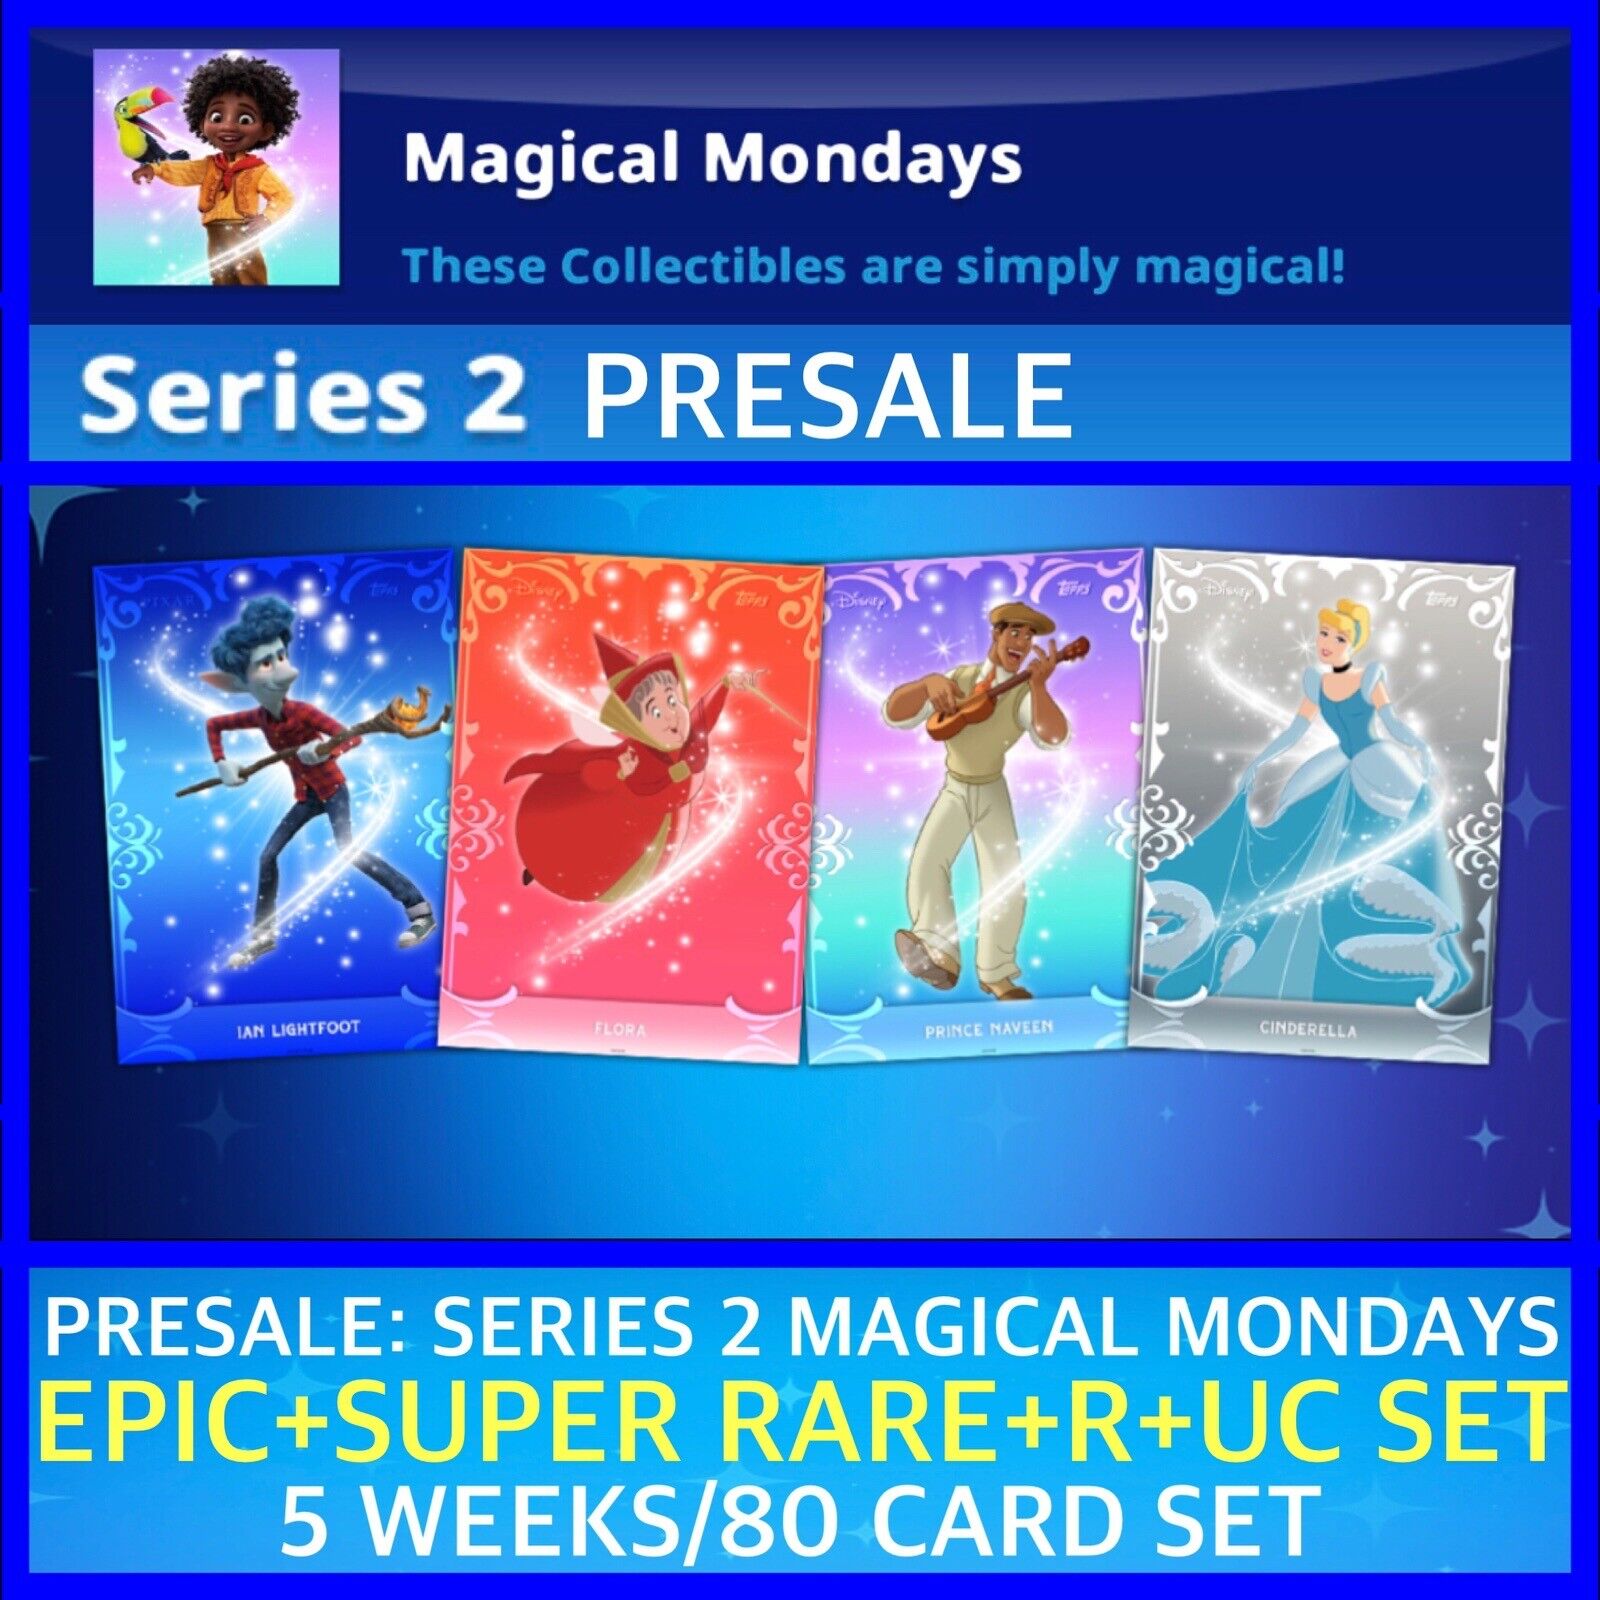 PRESALE-MAGICAL MONDAYS SERIES 2-EPIC+SR+R+UC 5 WEEK SET-TOPPS DISNEY COLLECT